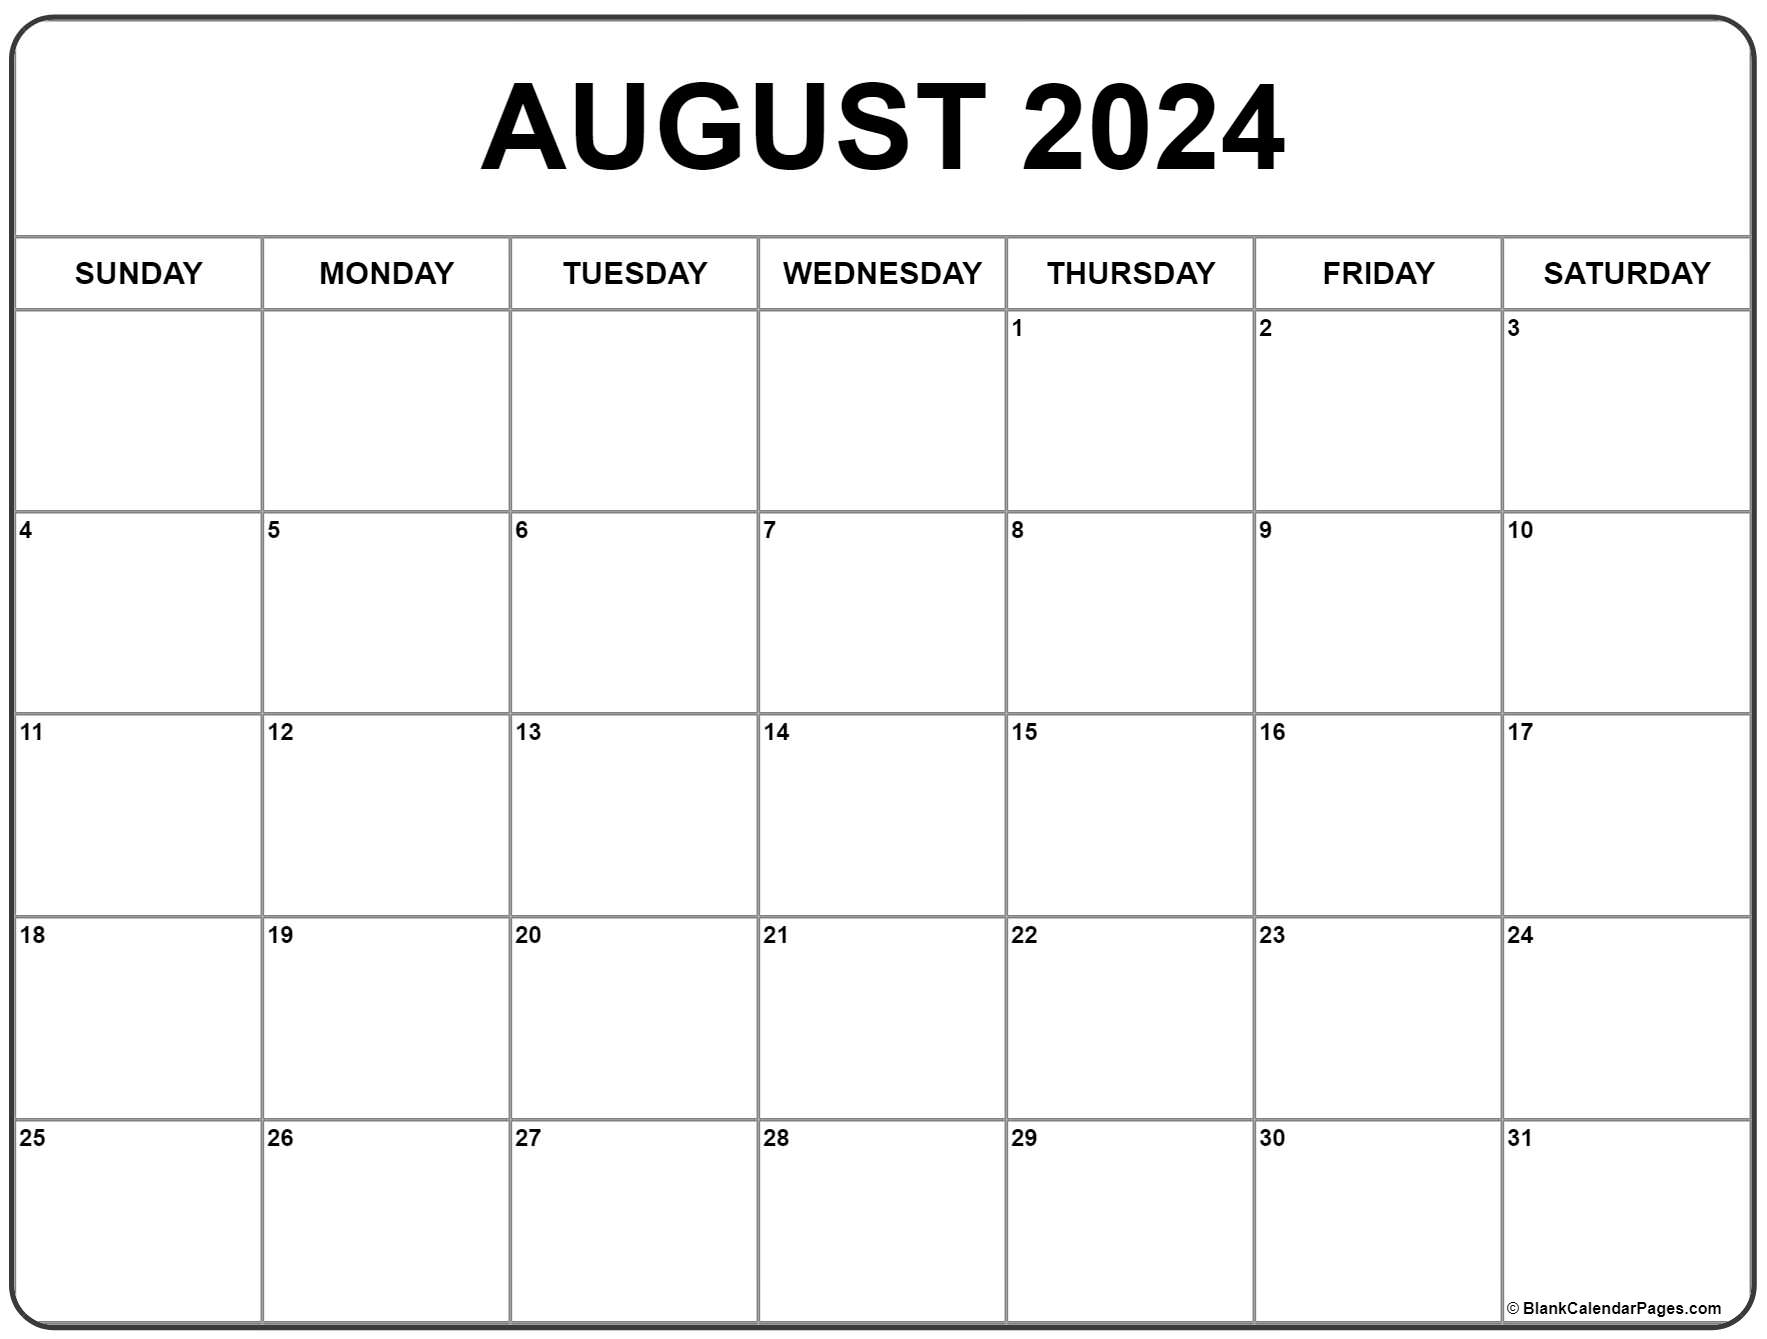 August 2024 Calendar | Free Printable Calendar for Printable Calendar August 2024